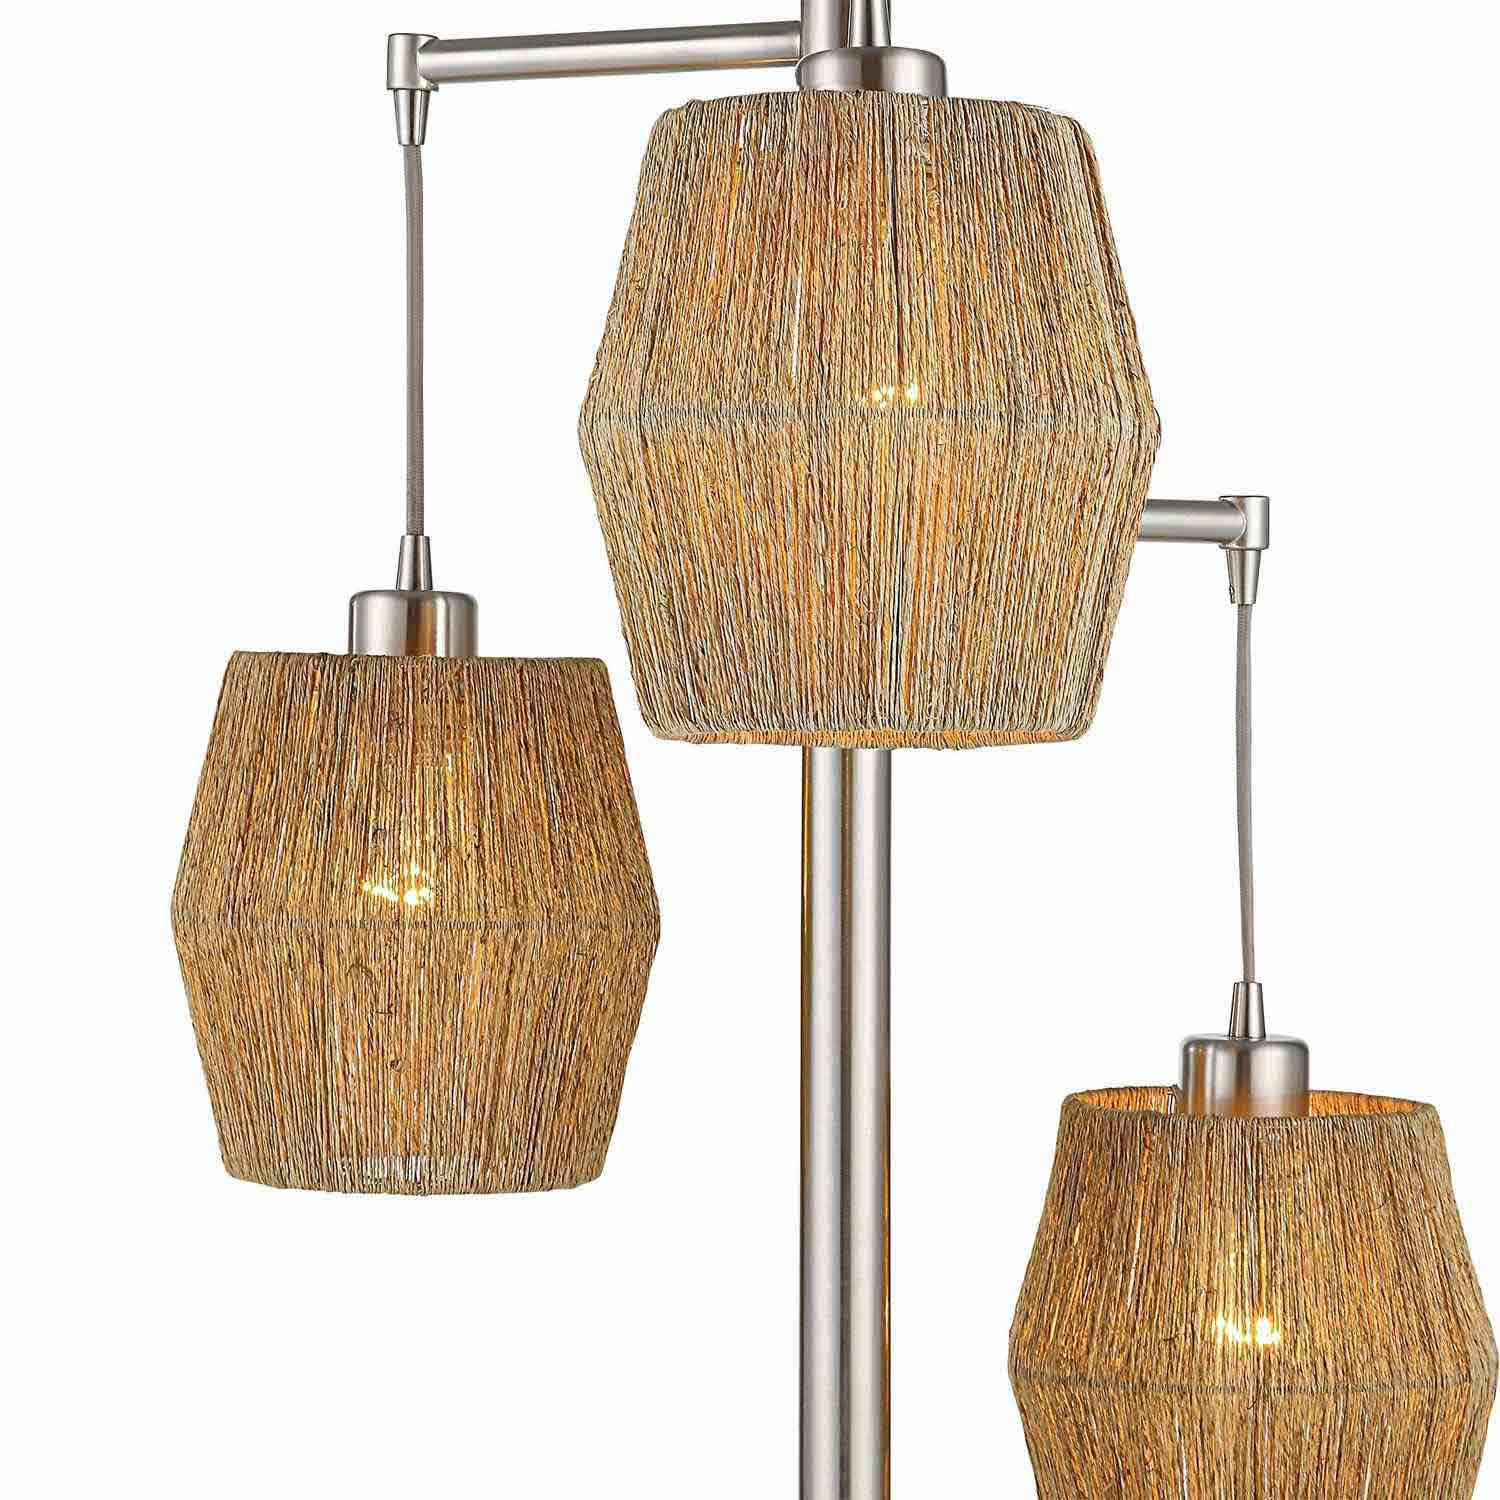 Uttermost W26090-1 Floor Lamp - Brushed Nickel